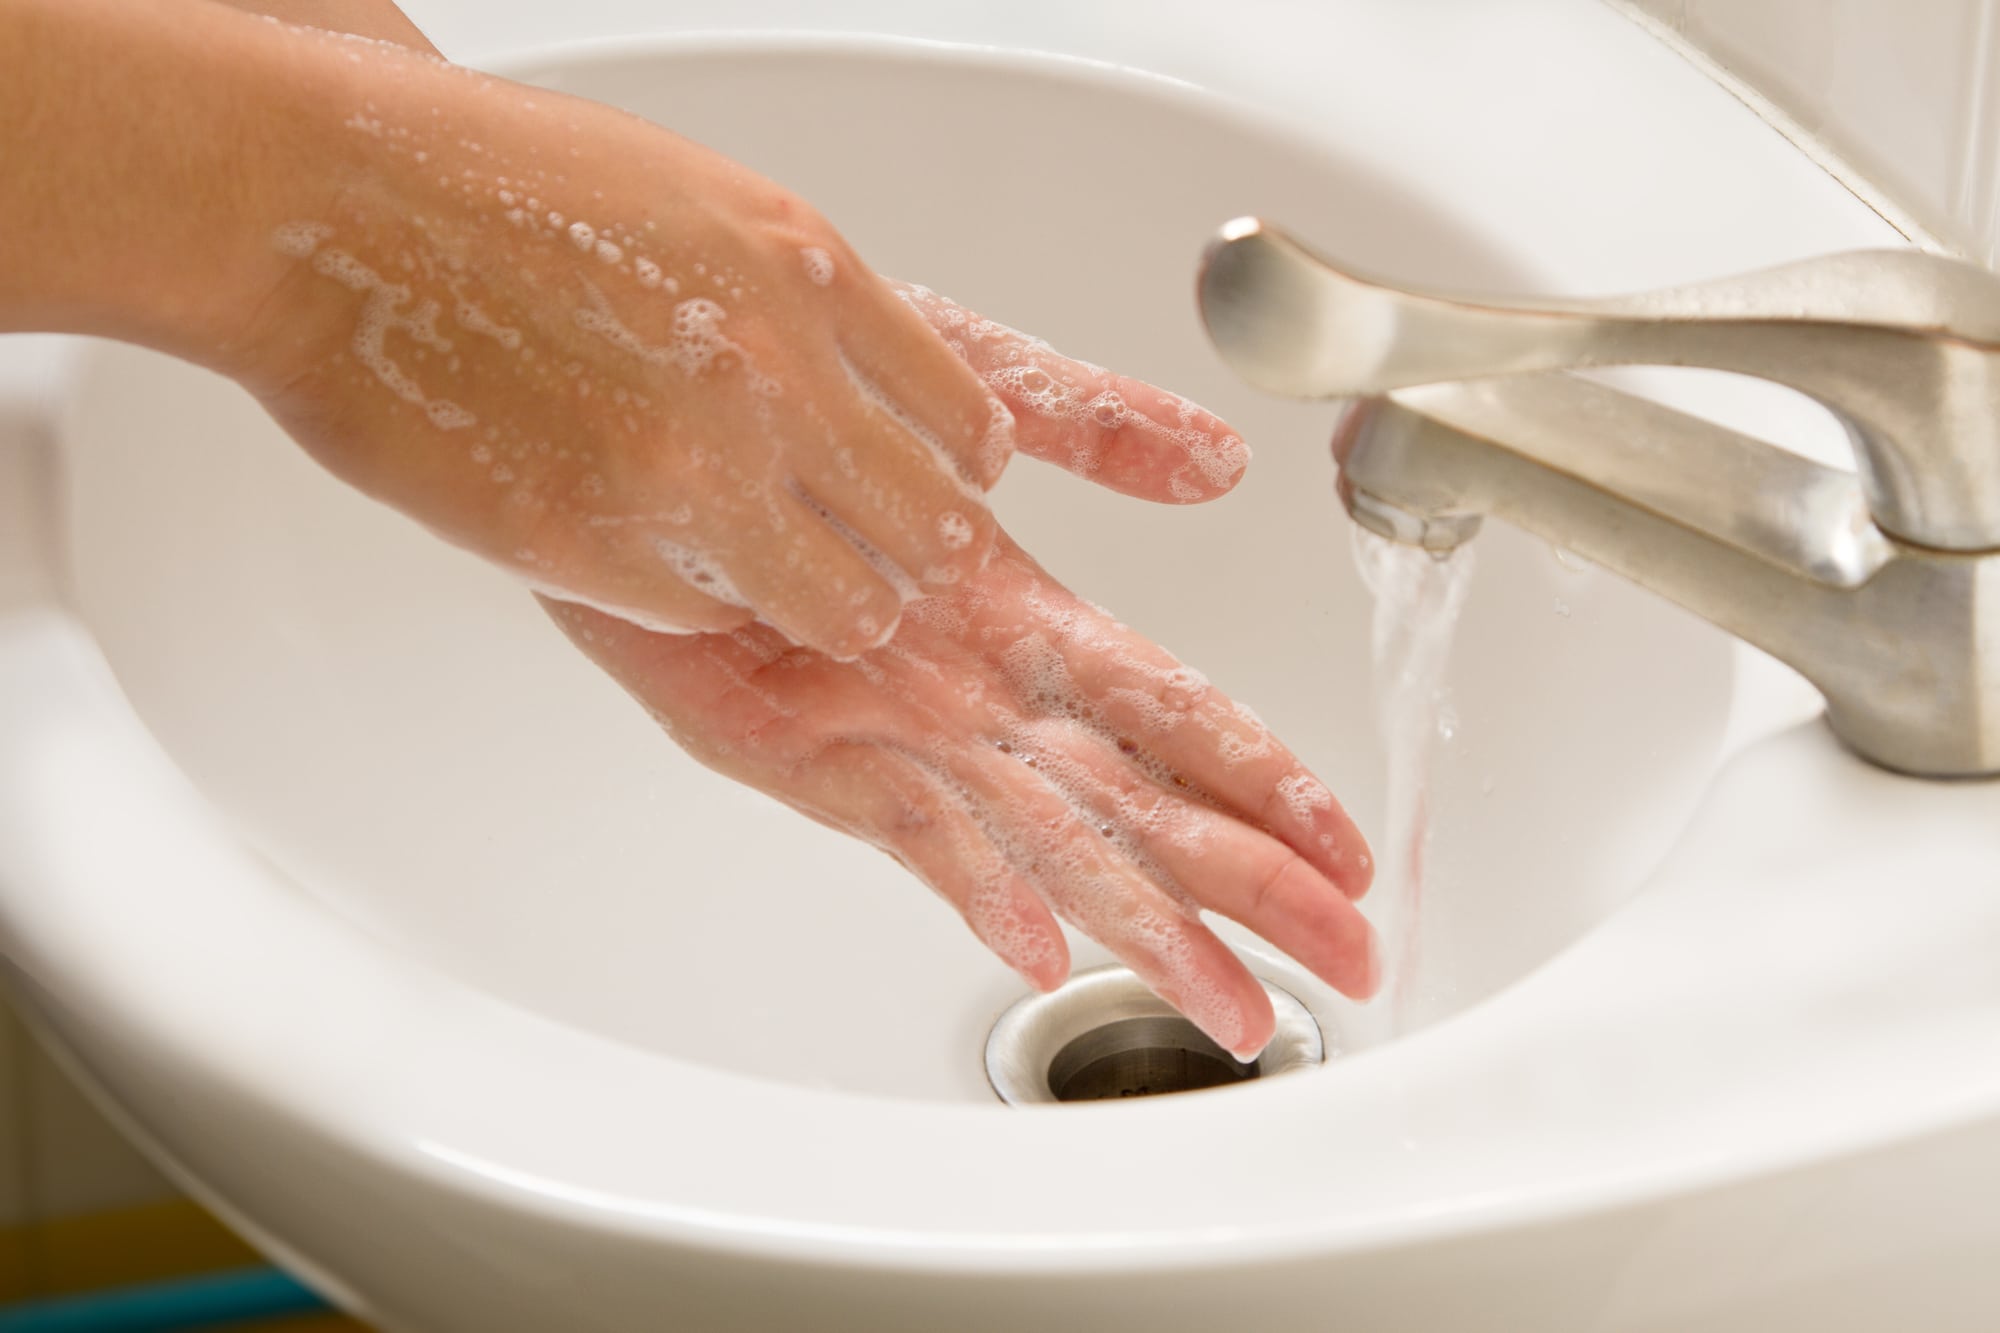 infection control through handwashing